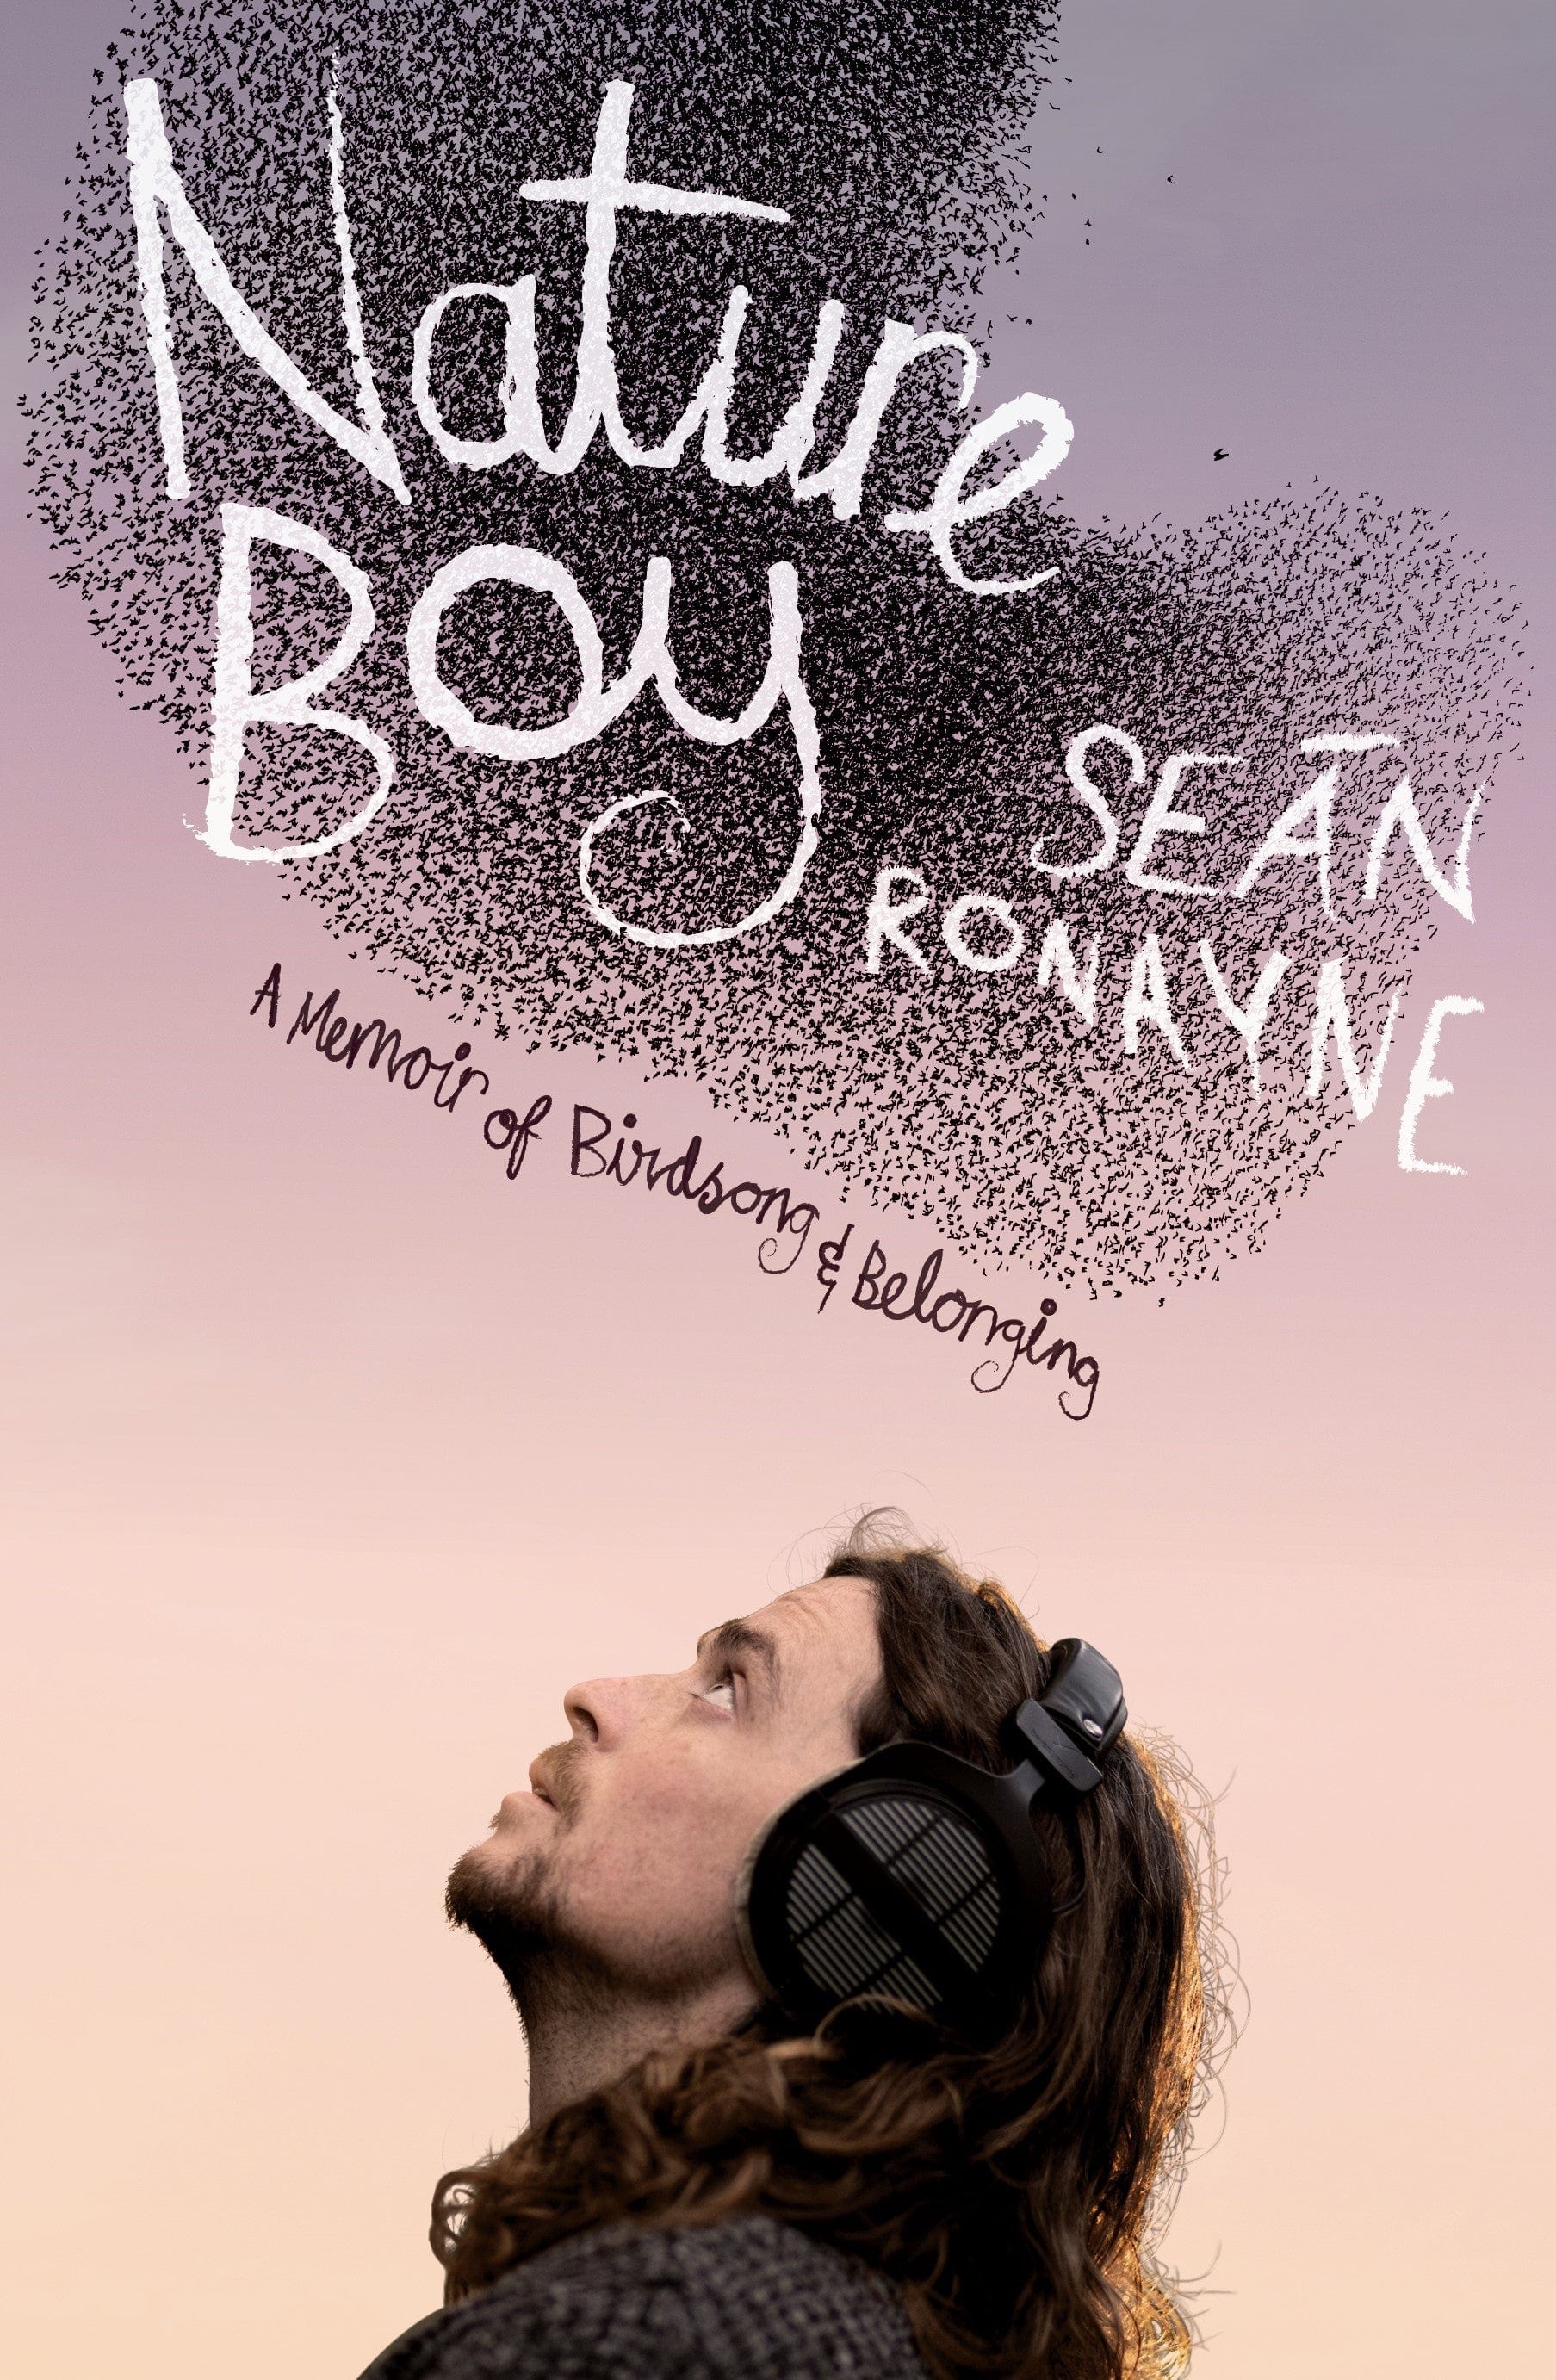 Ronayne, Sean PREORDER NONFICTION New Nature Boy: A memoir of birdsong and belonging by Seán Ronayne